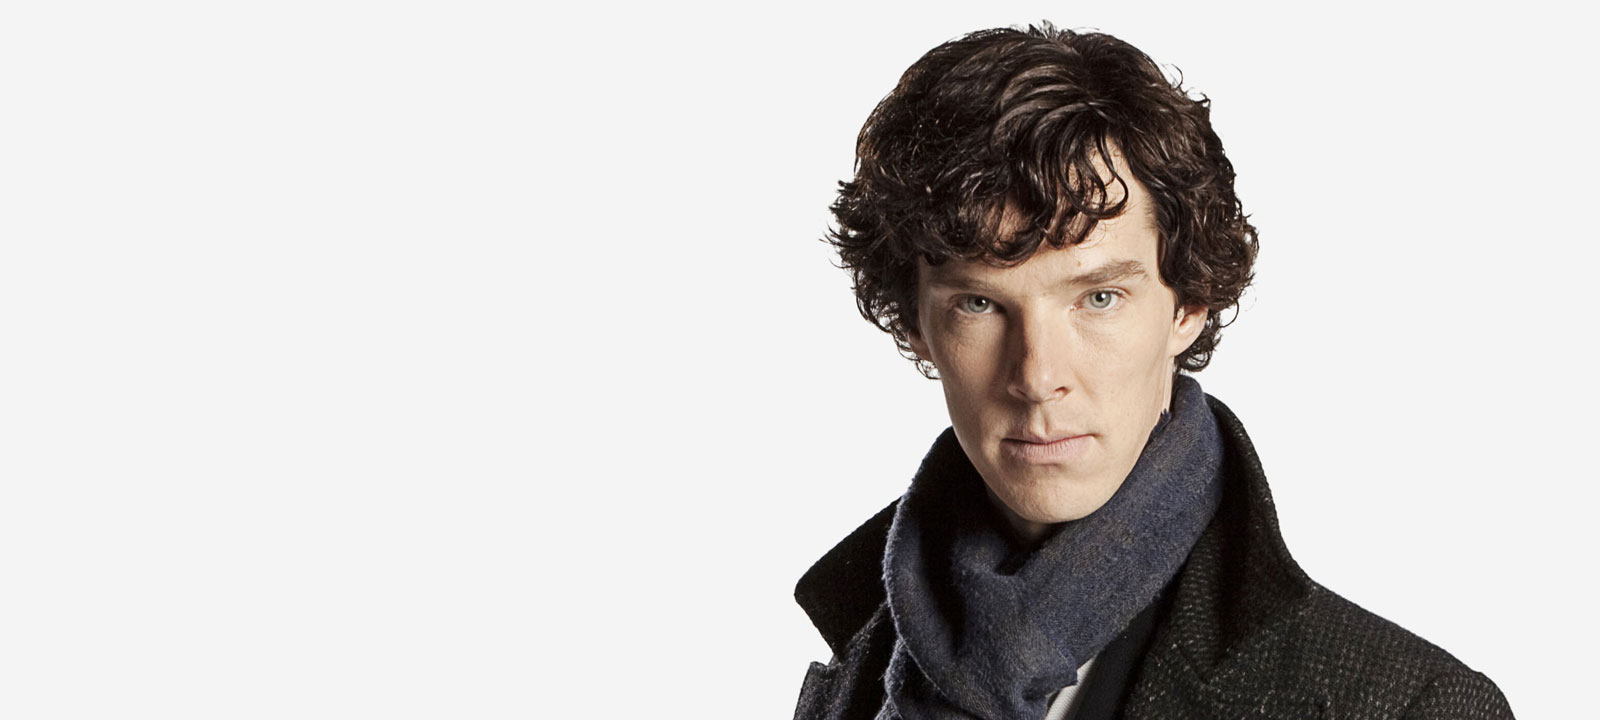 Sherlock HD wallpapers, Desktop wallpaper - most viewed